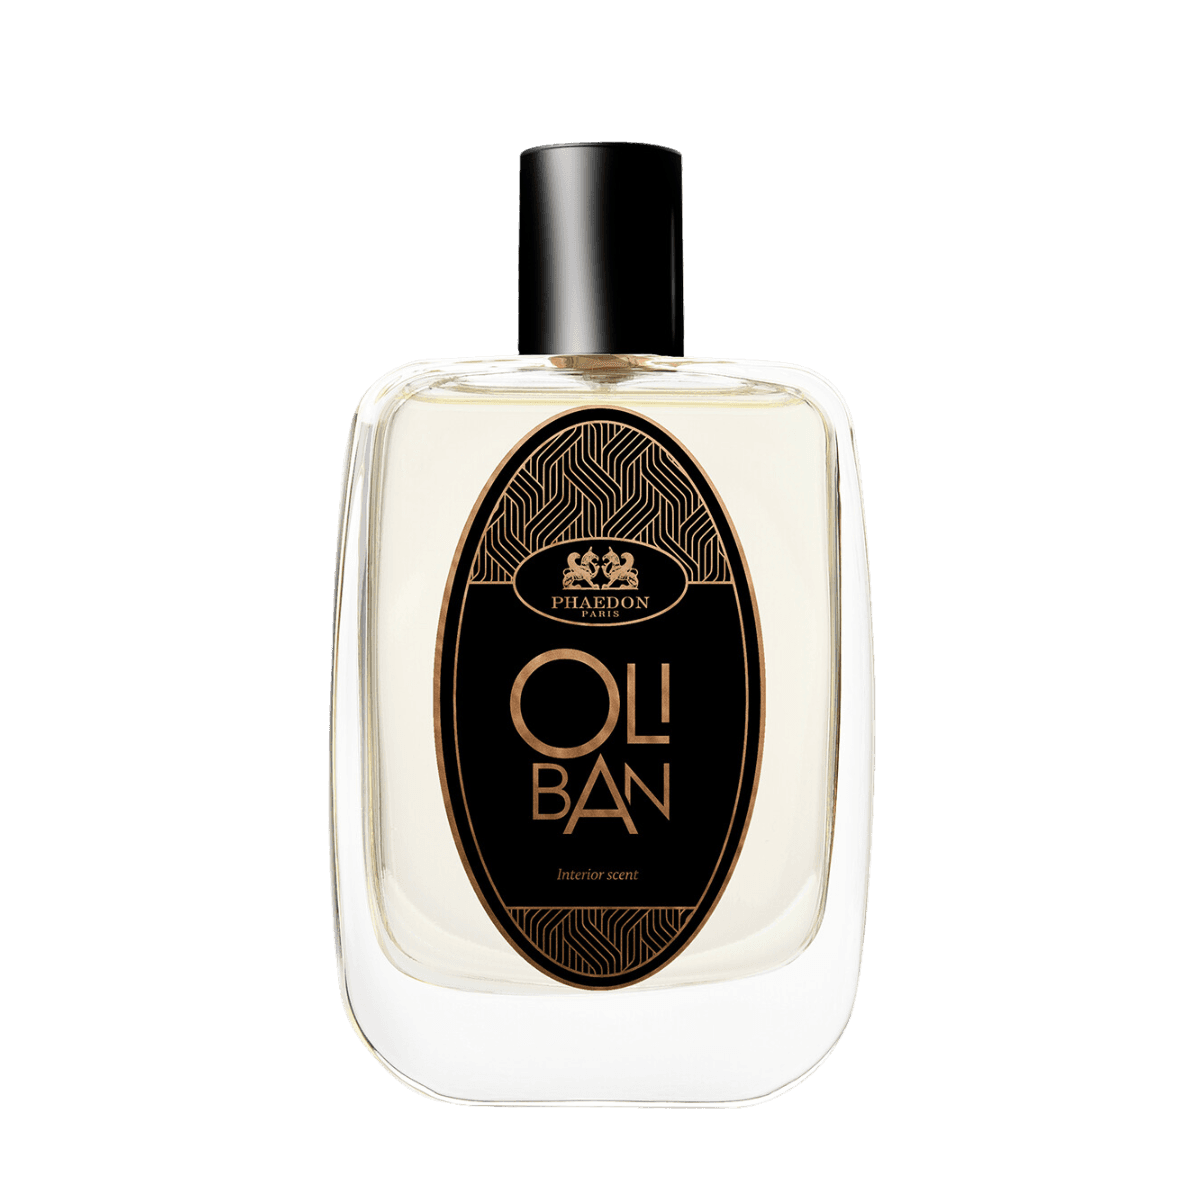 Image of Oliban room spray by the perfume brand Phaedon